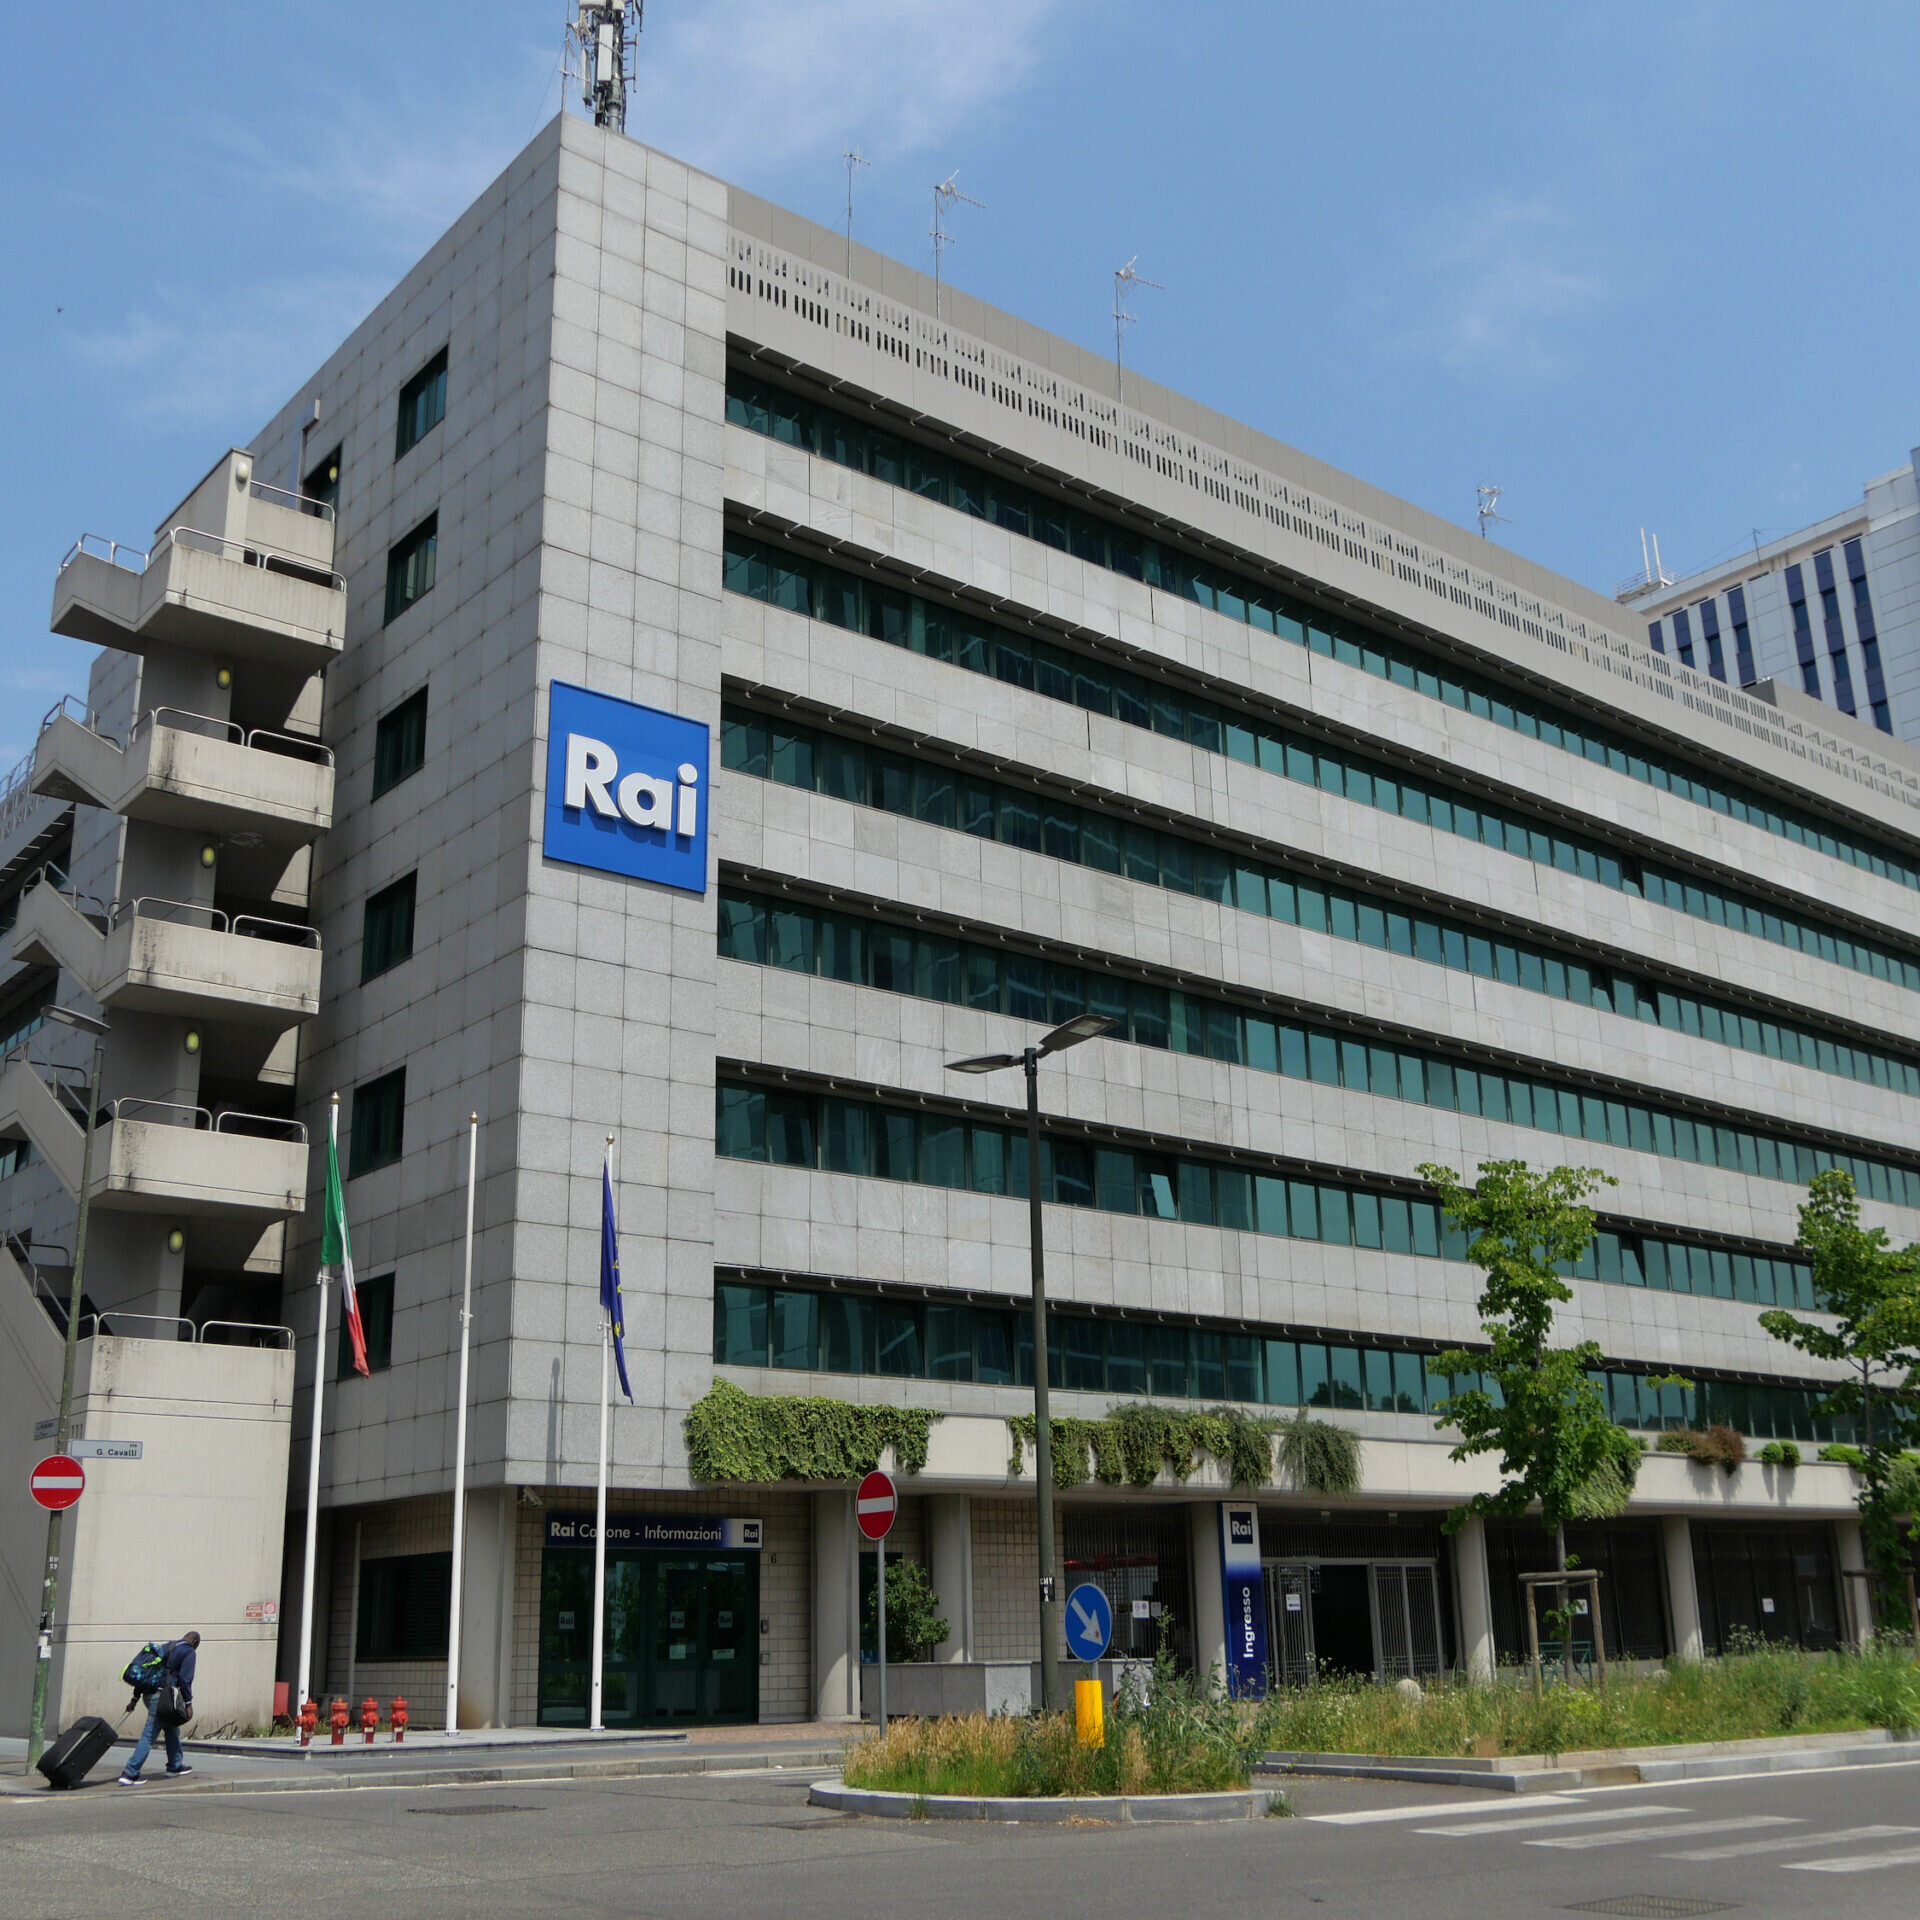 Exterior shot of Rai headquarters with Rai logo.